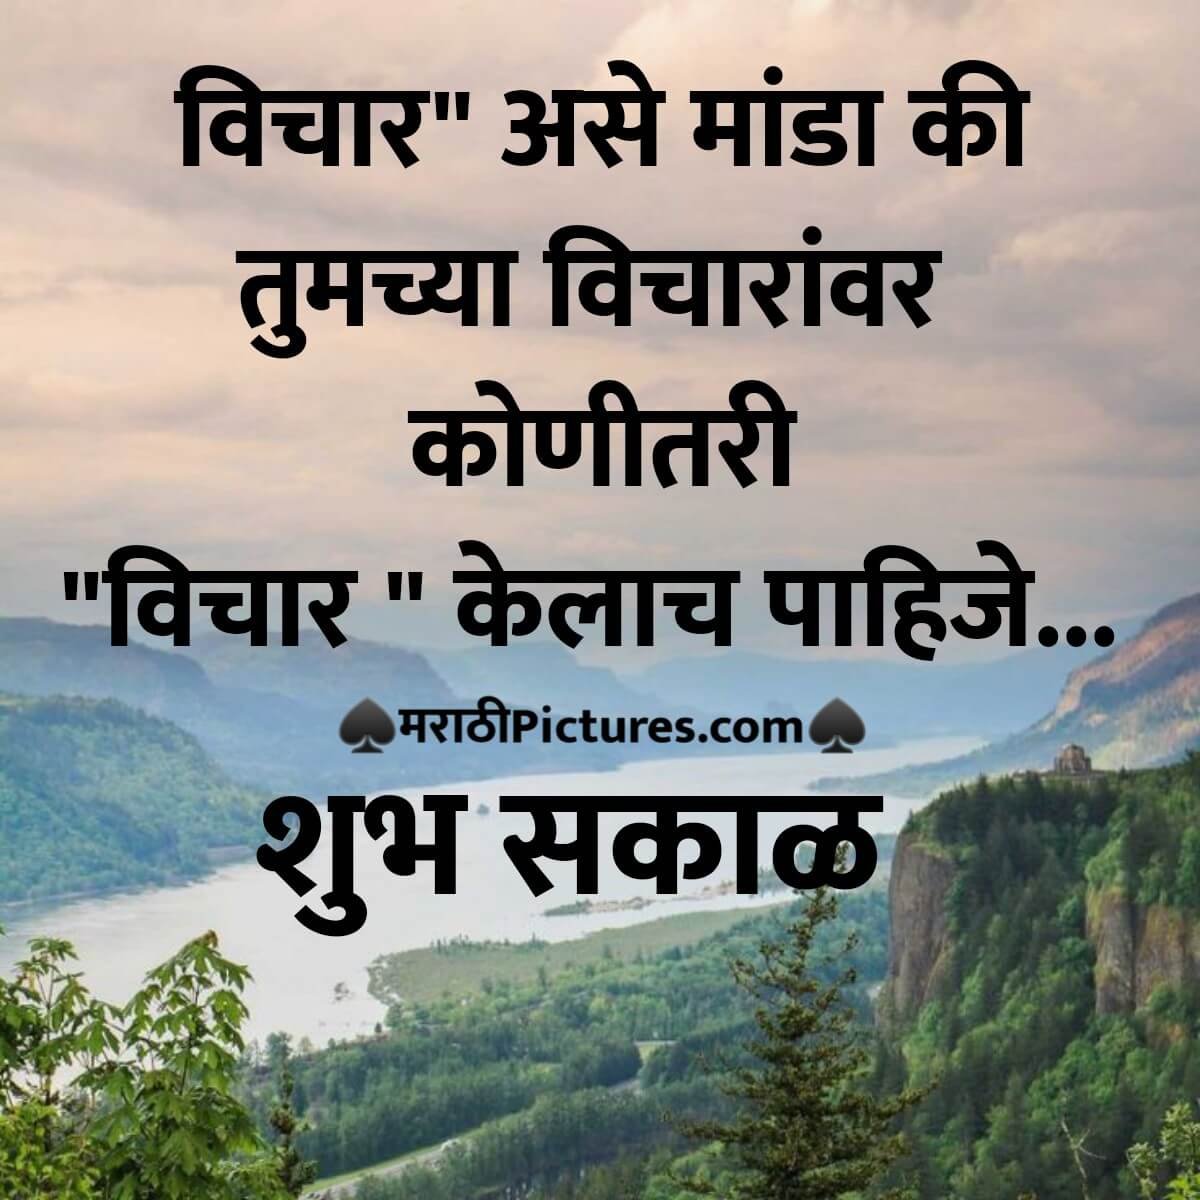 Shubh Sakal Marathi Quote